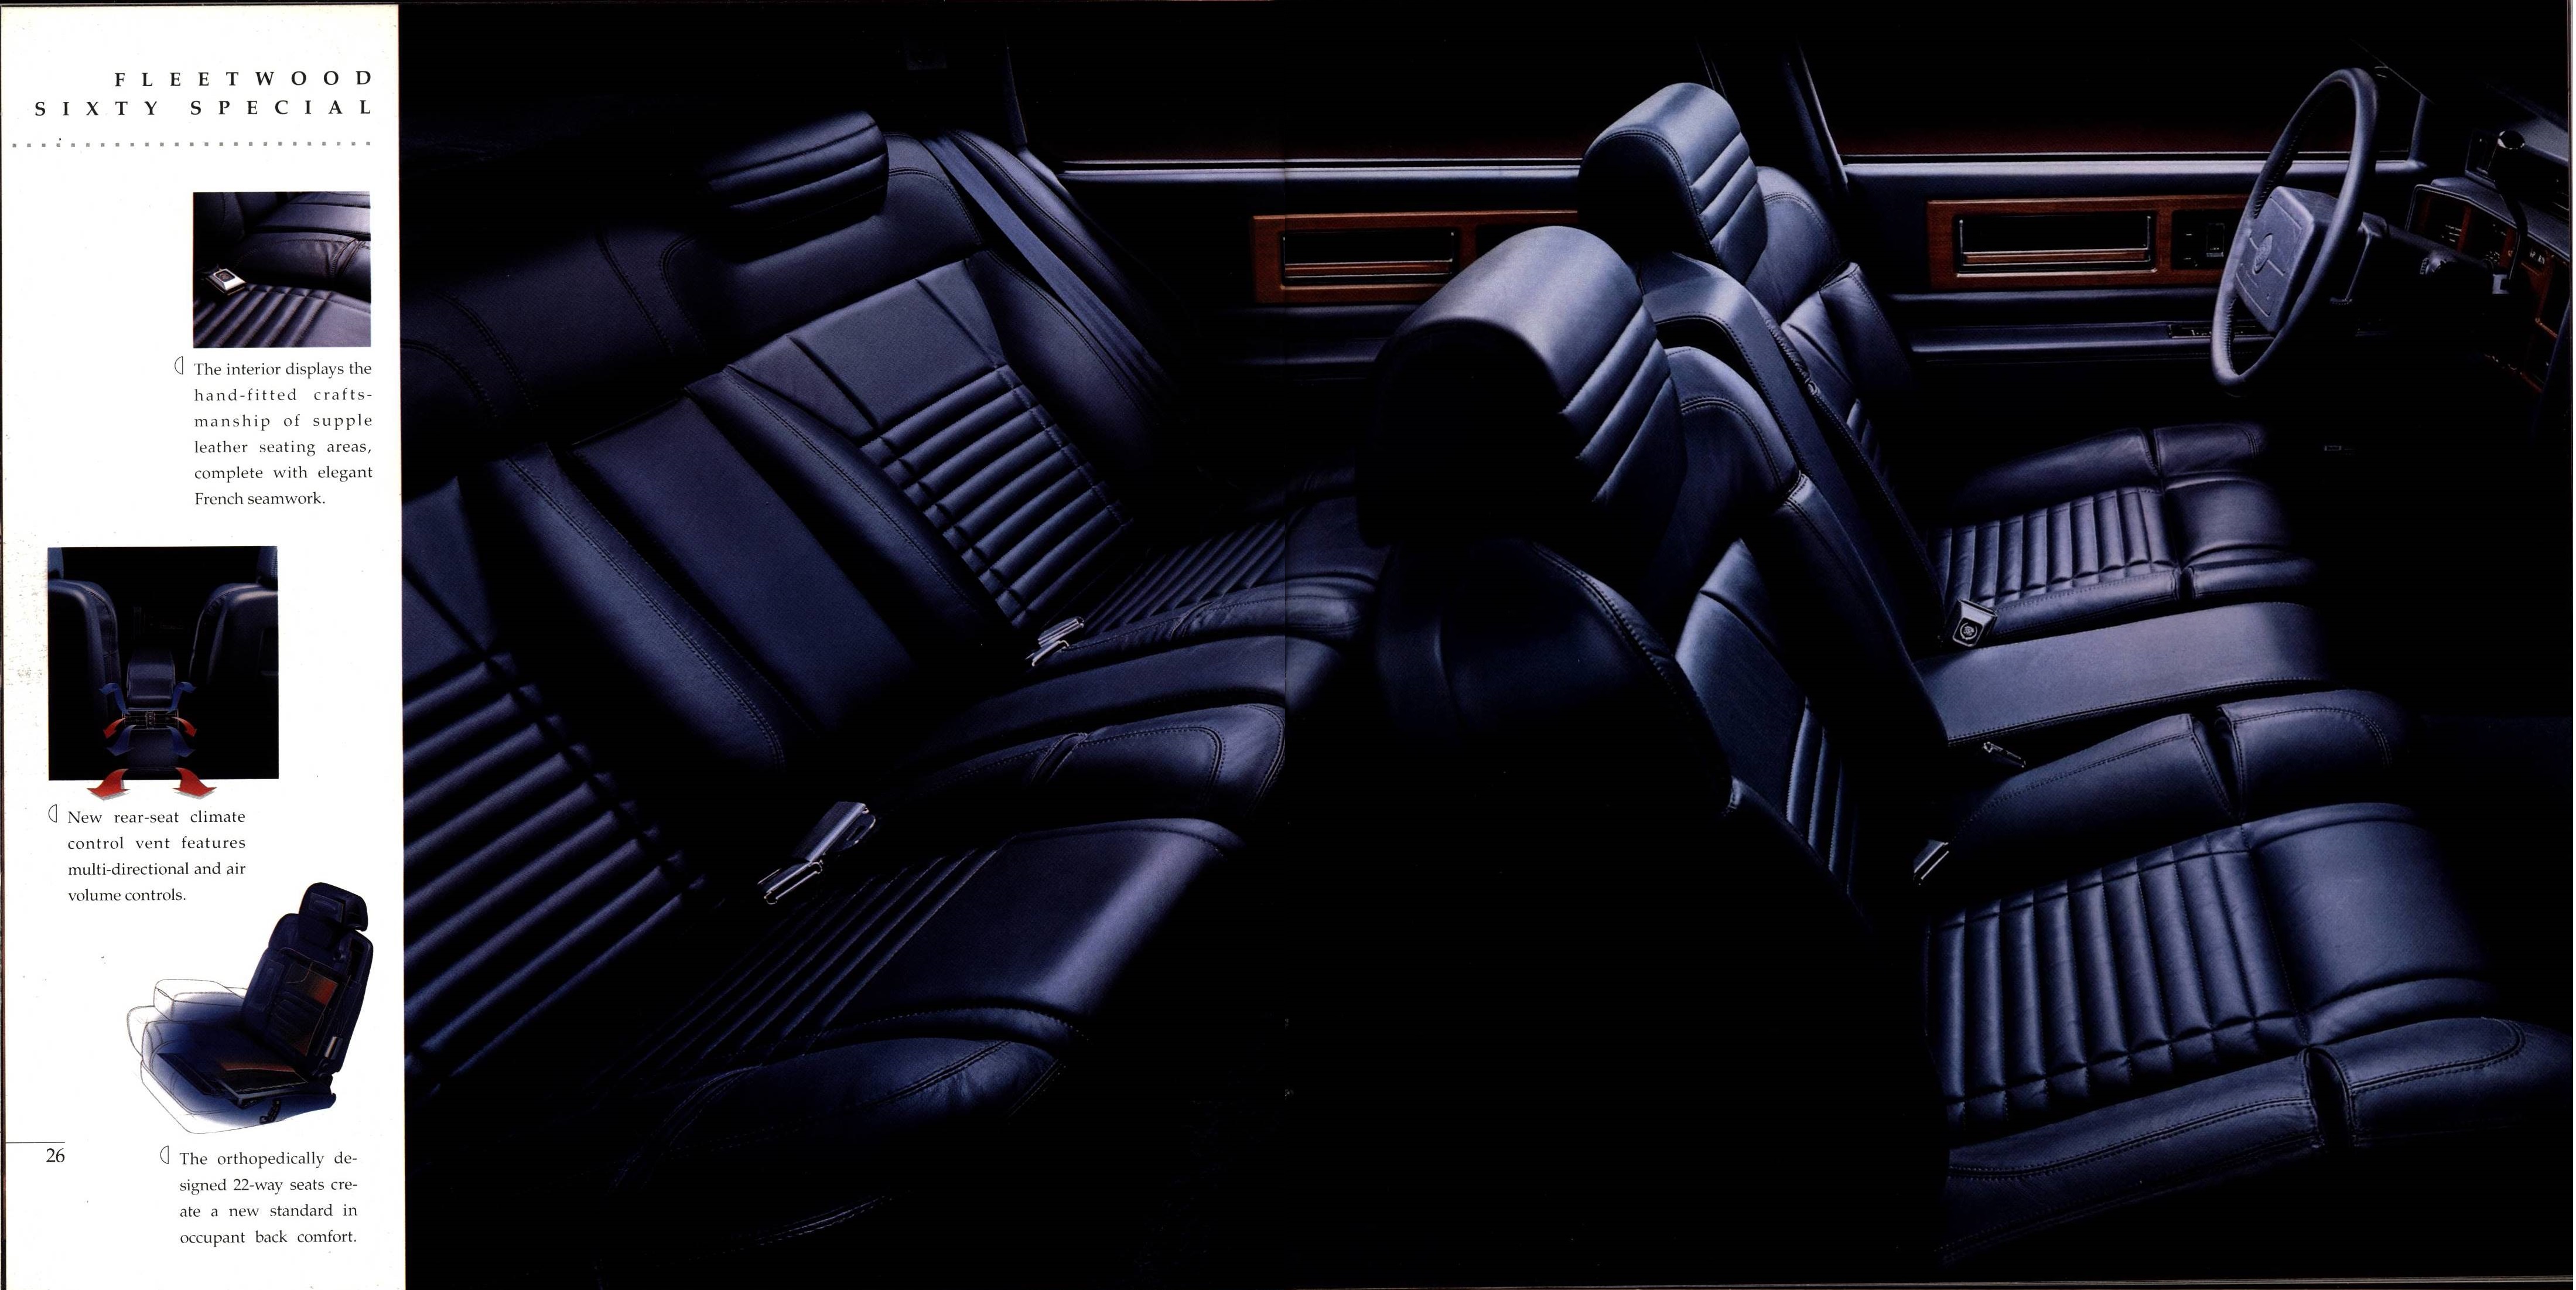 1991 Cadillac Full Line Prestige-15